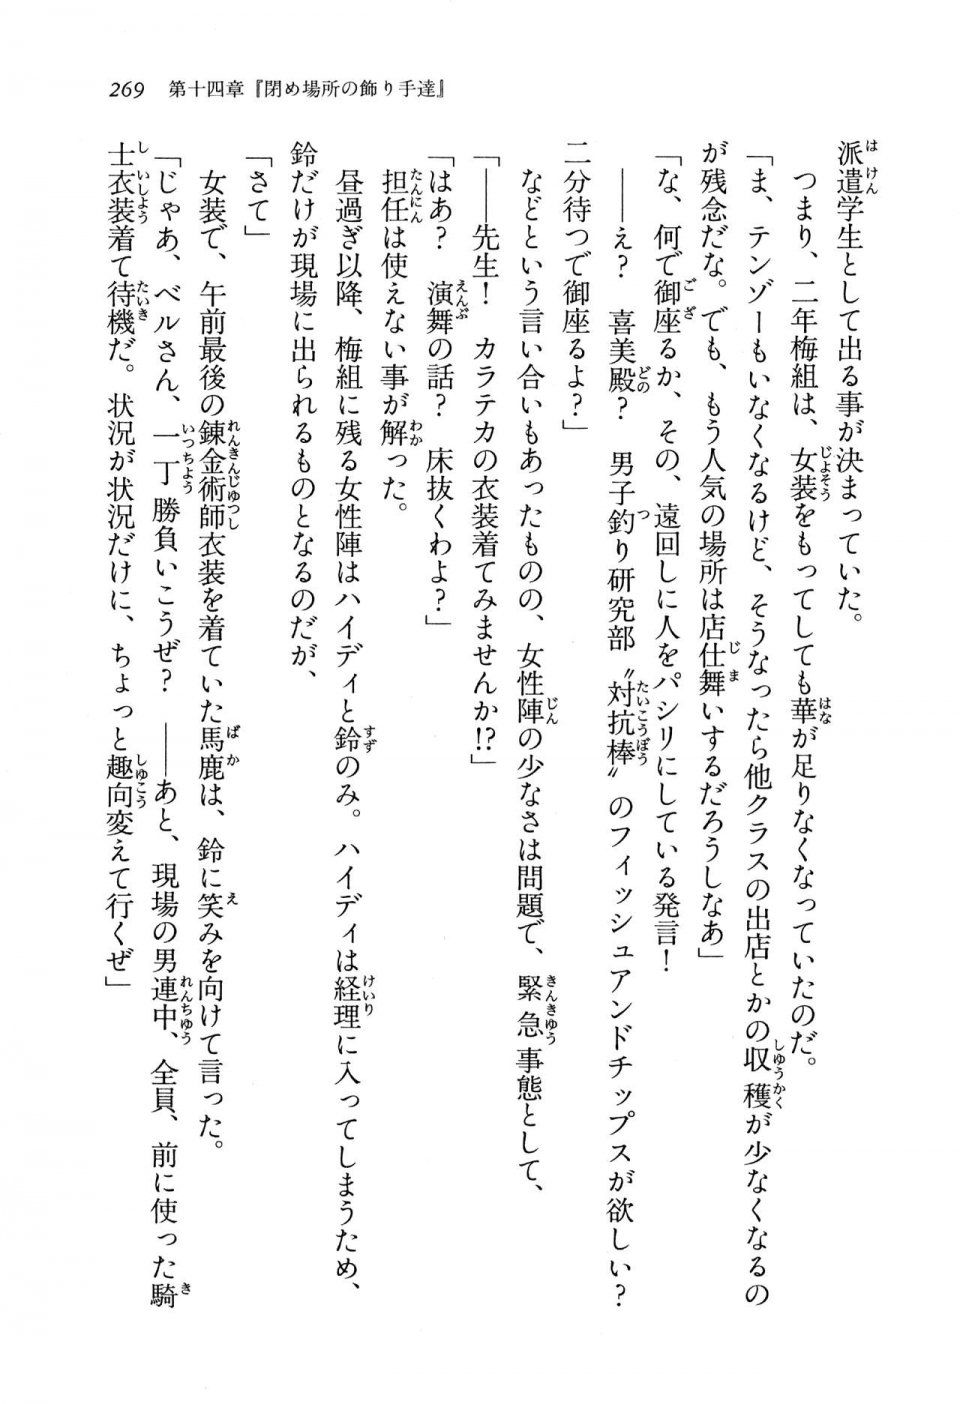 Kyoukai Senjou no Horizon BD Special Mininovel Vol 8(4B) - Photo #273